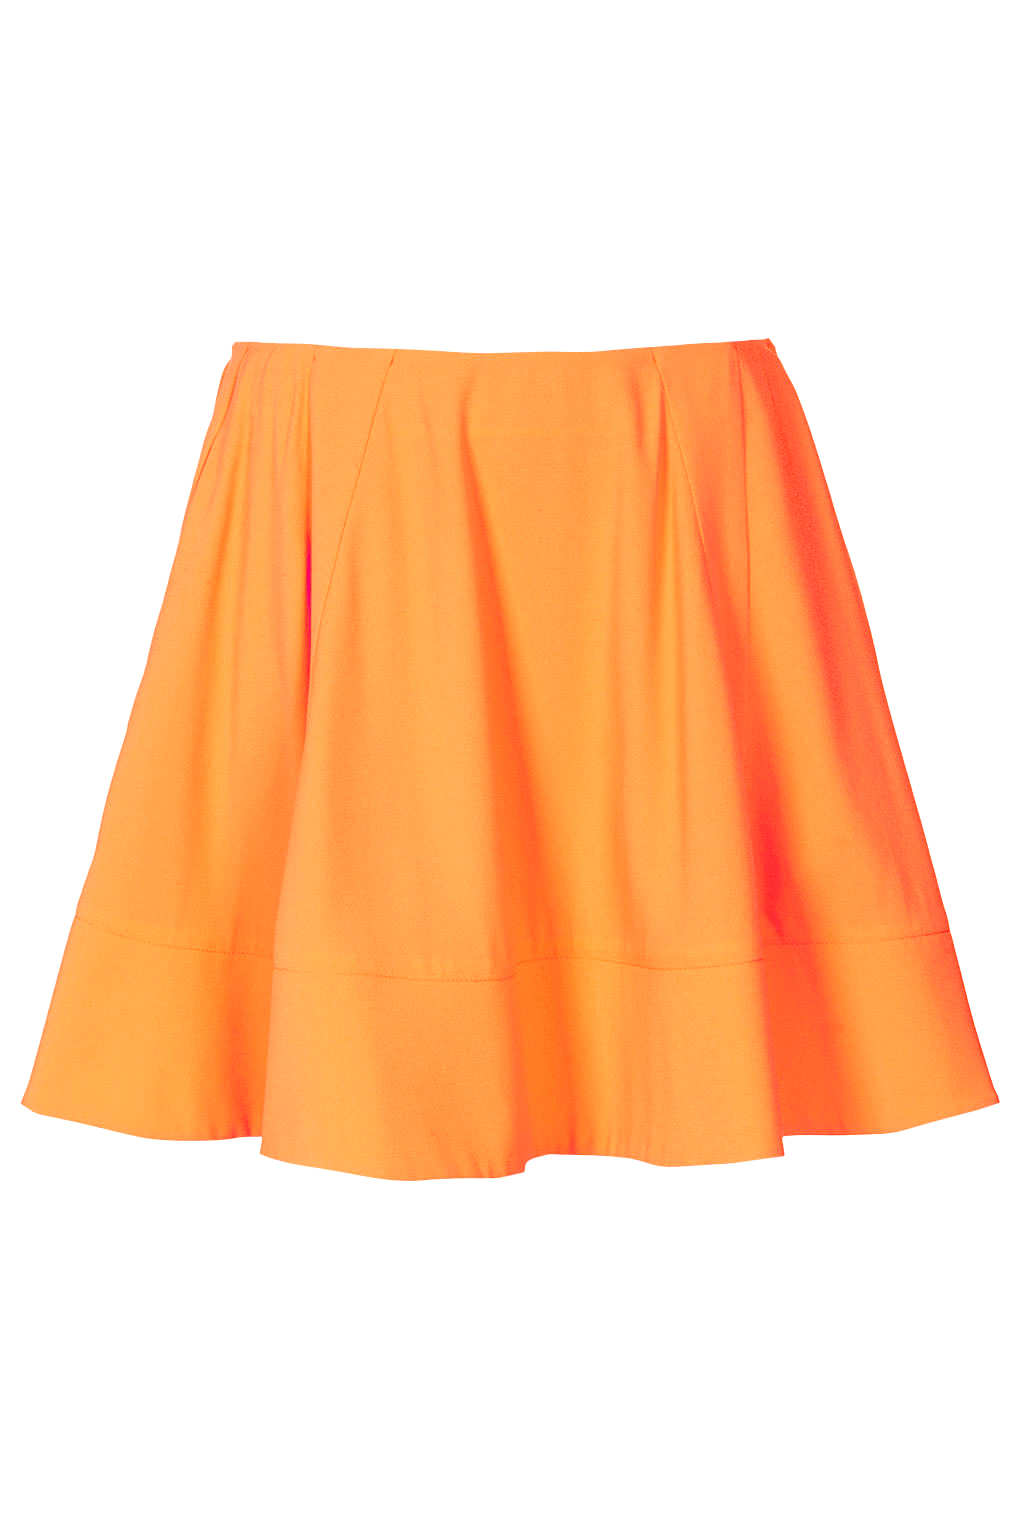 Topshop Bright Orange Crepe Skirt in Orange | Lyst